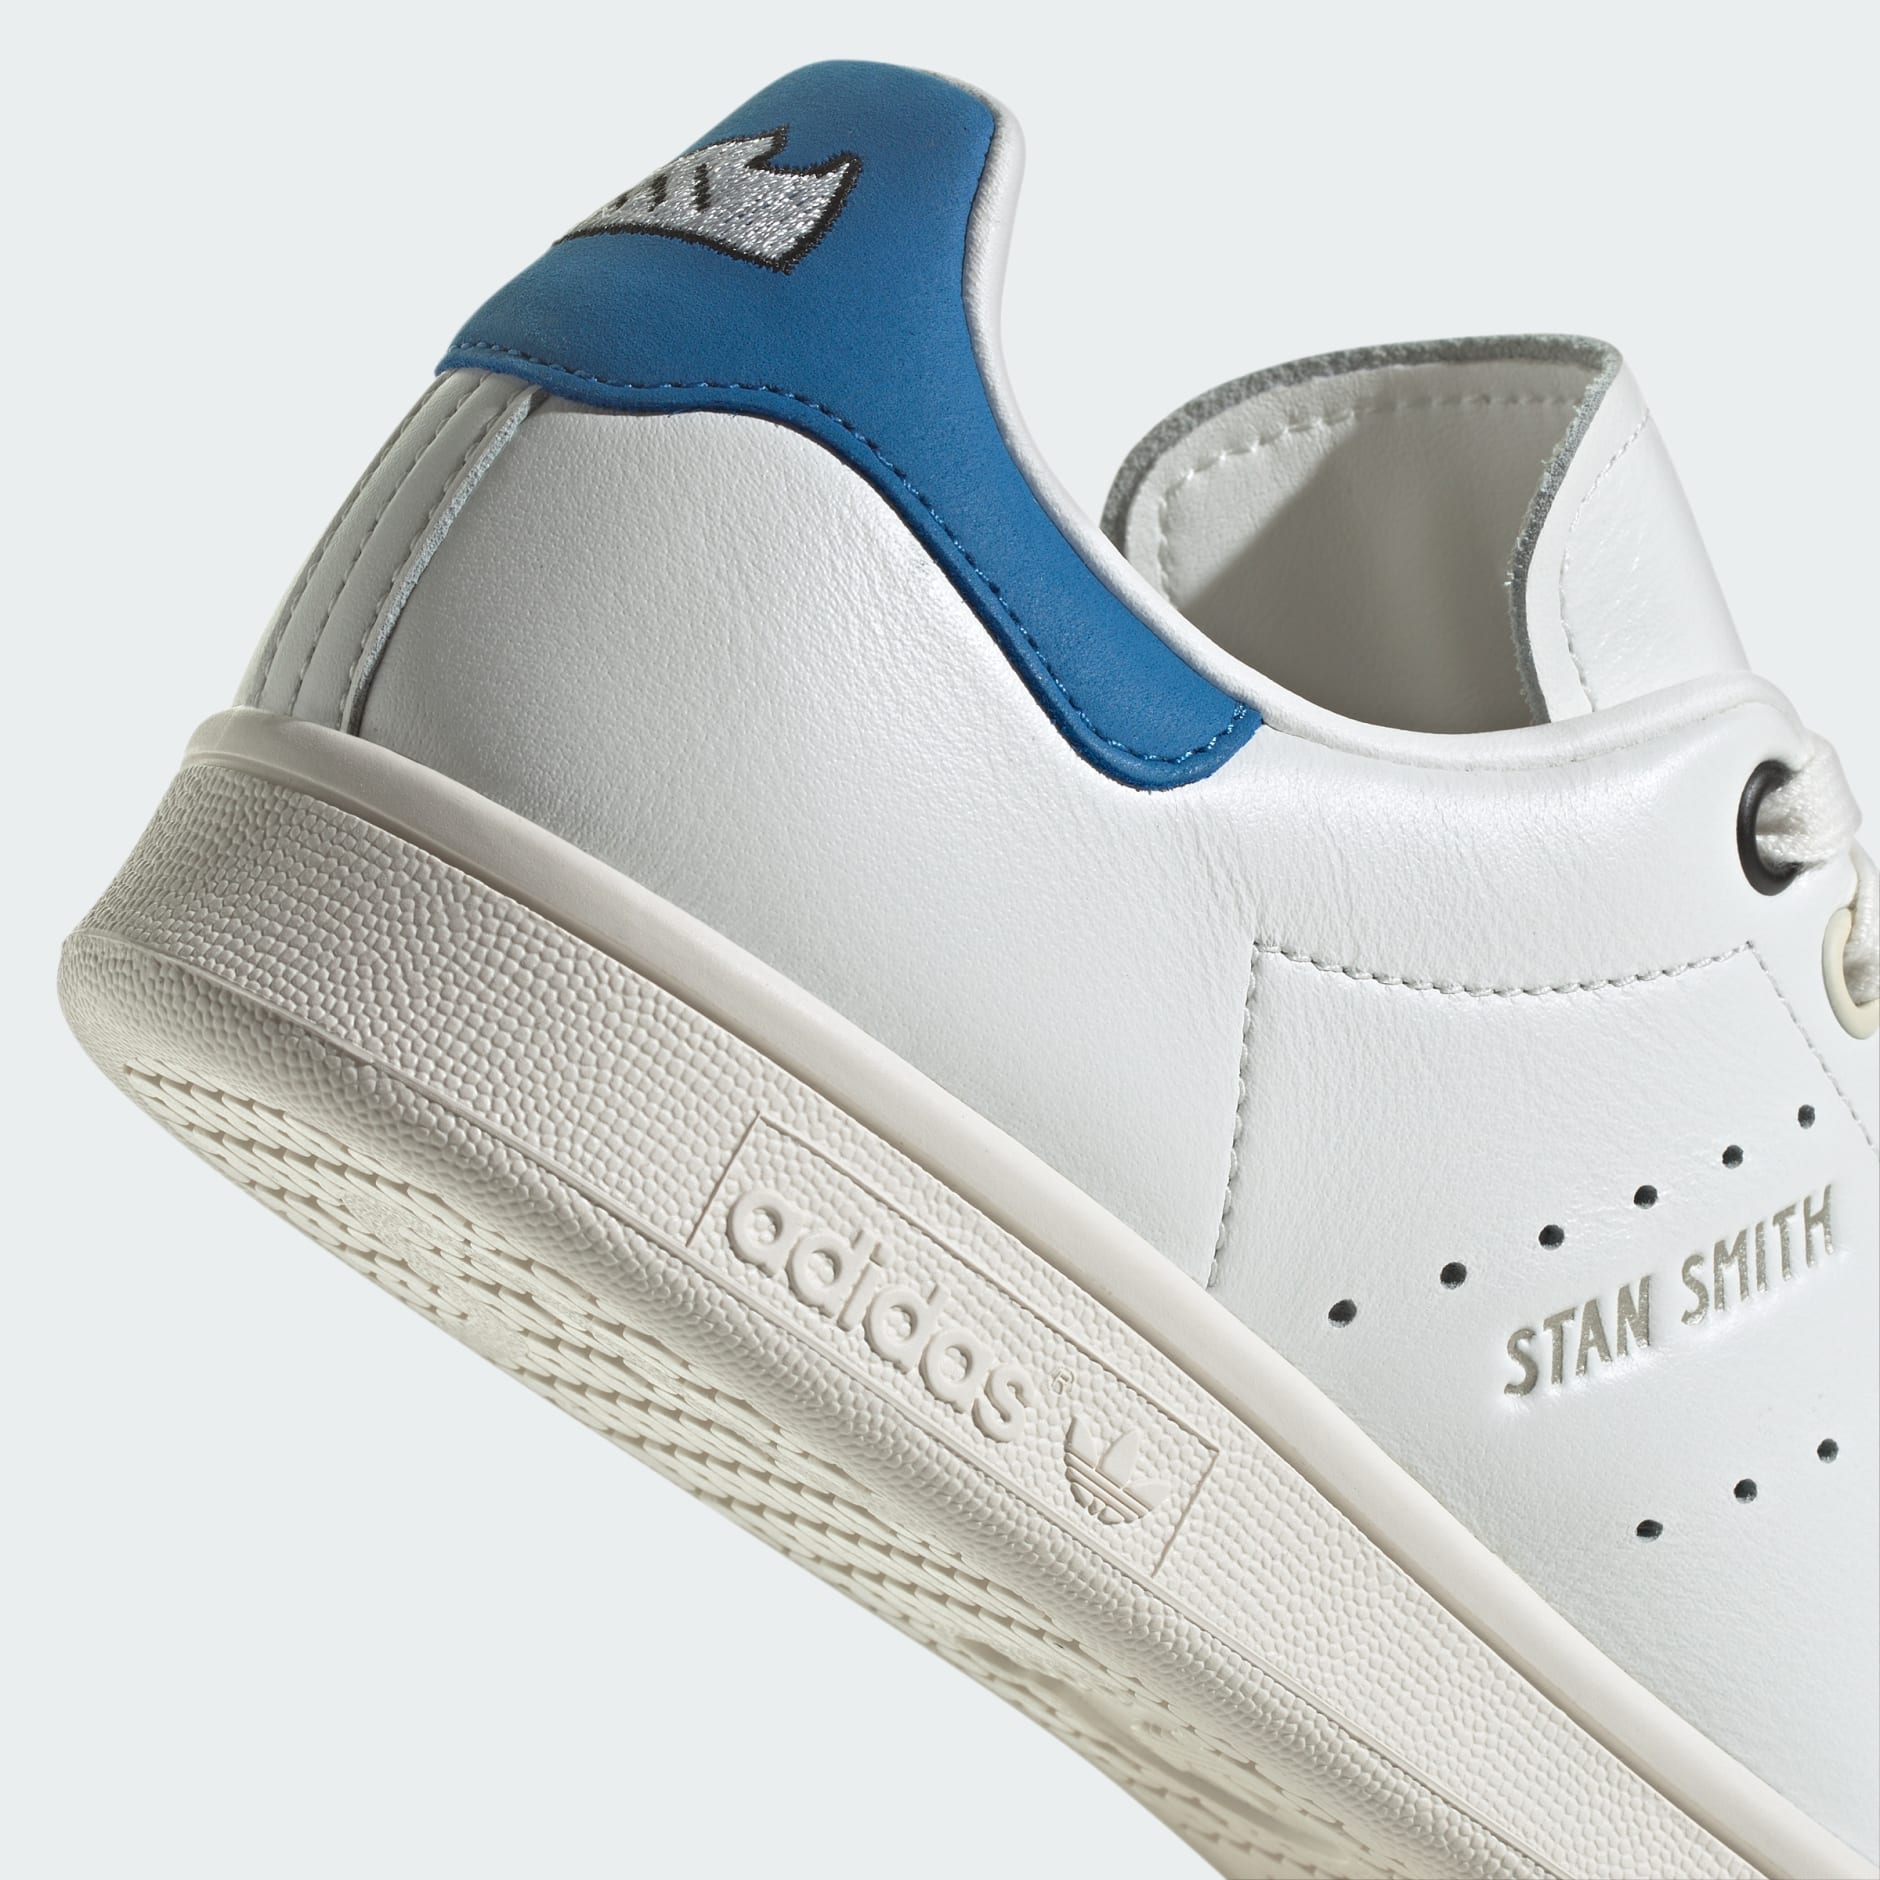 Shoes - ADI DASSLER STAN SMITH W - White | adidas South Africa